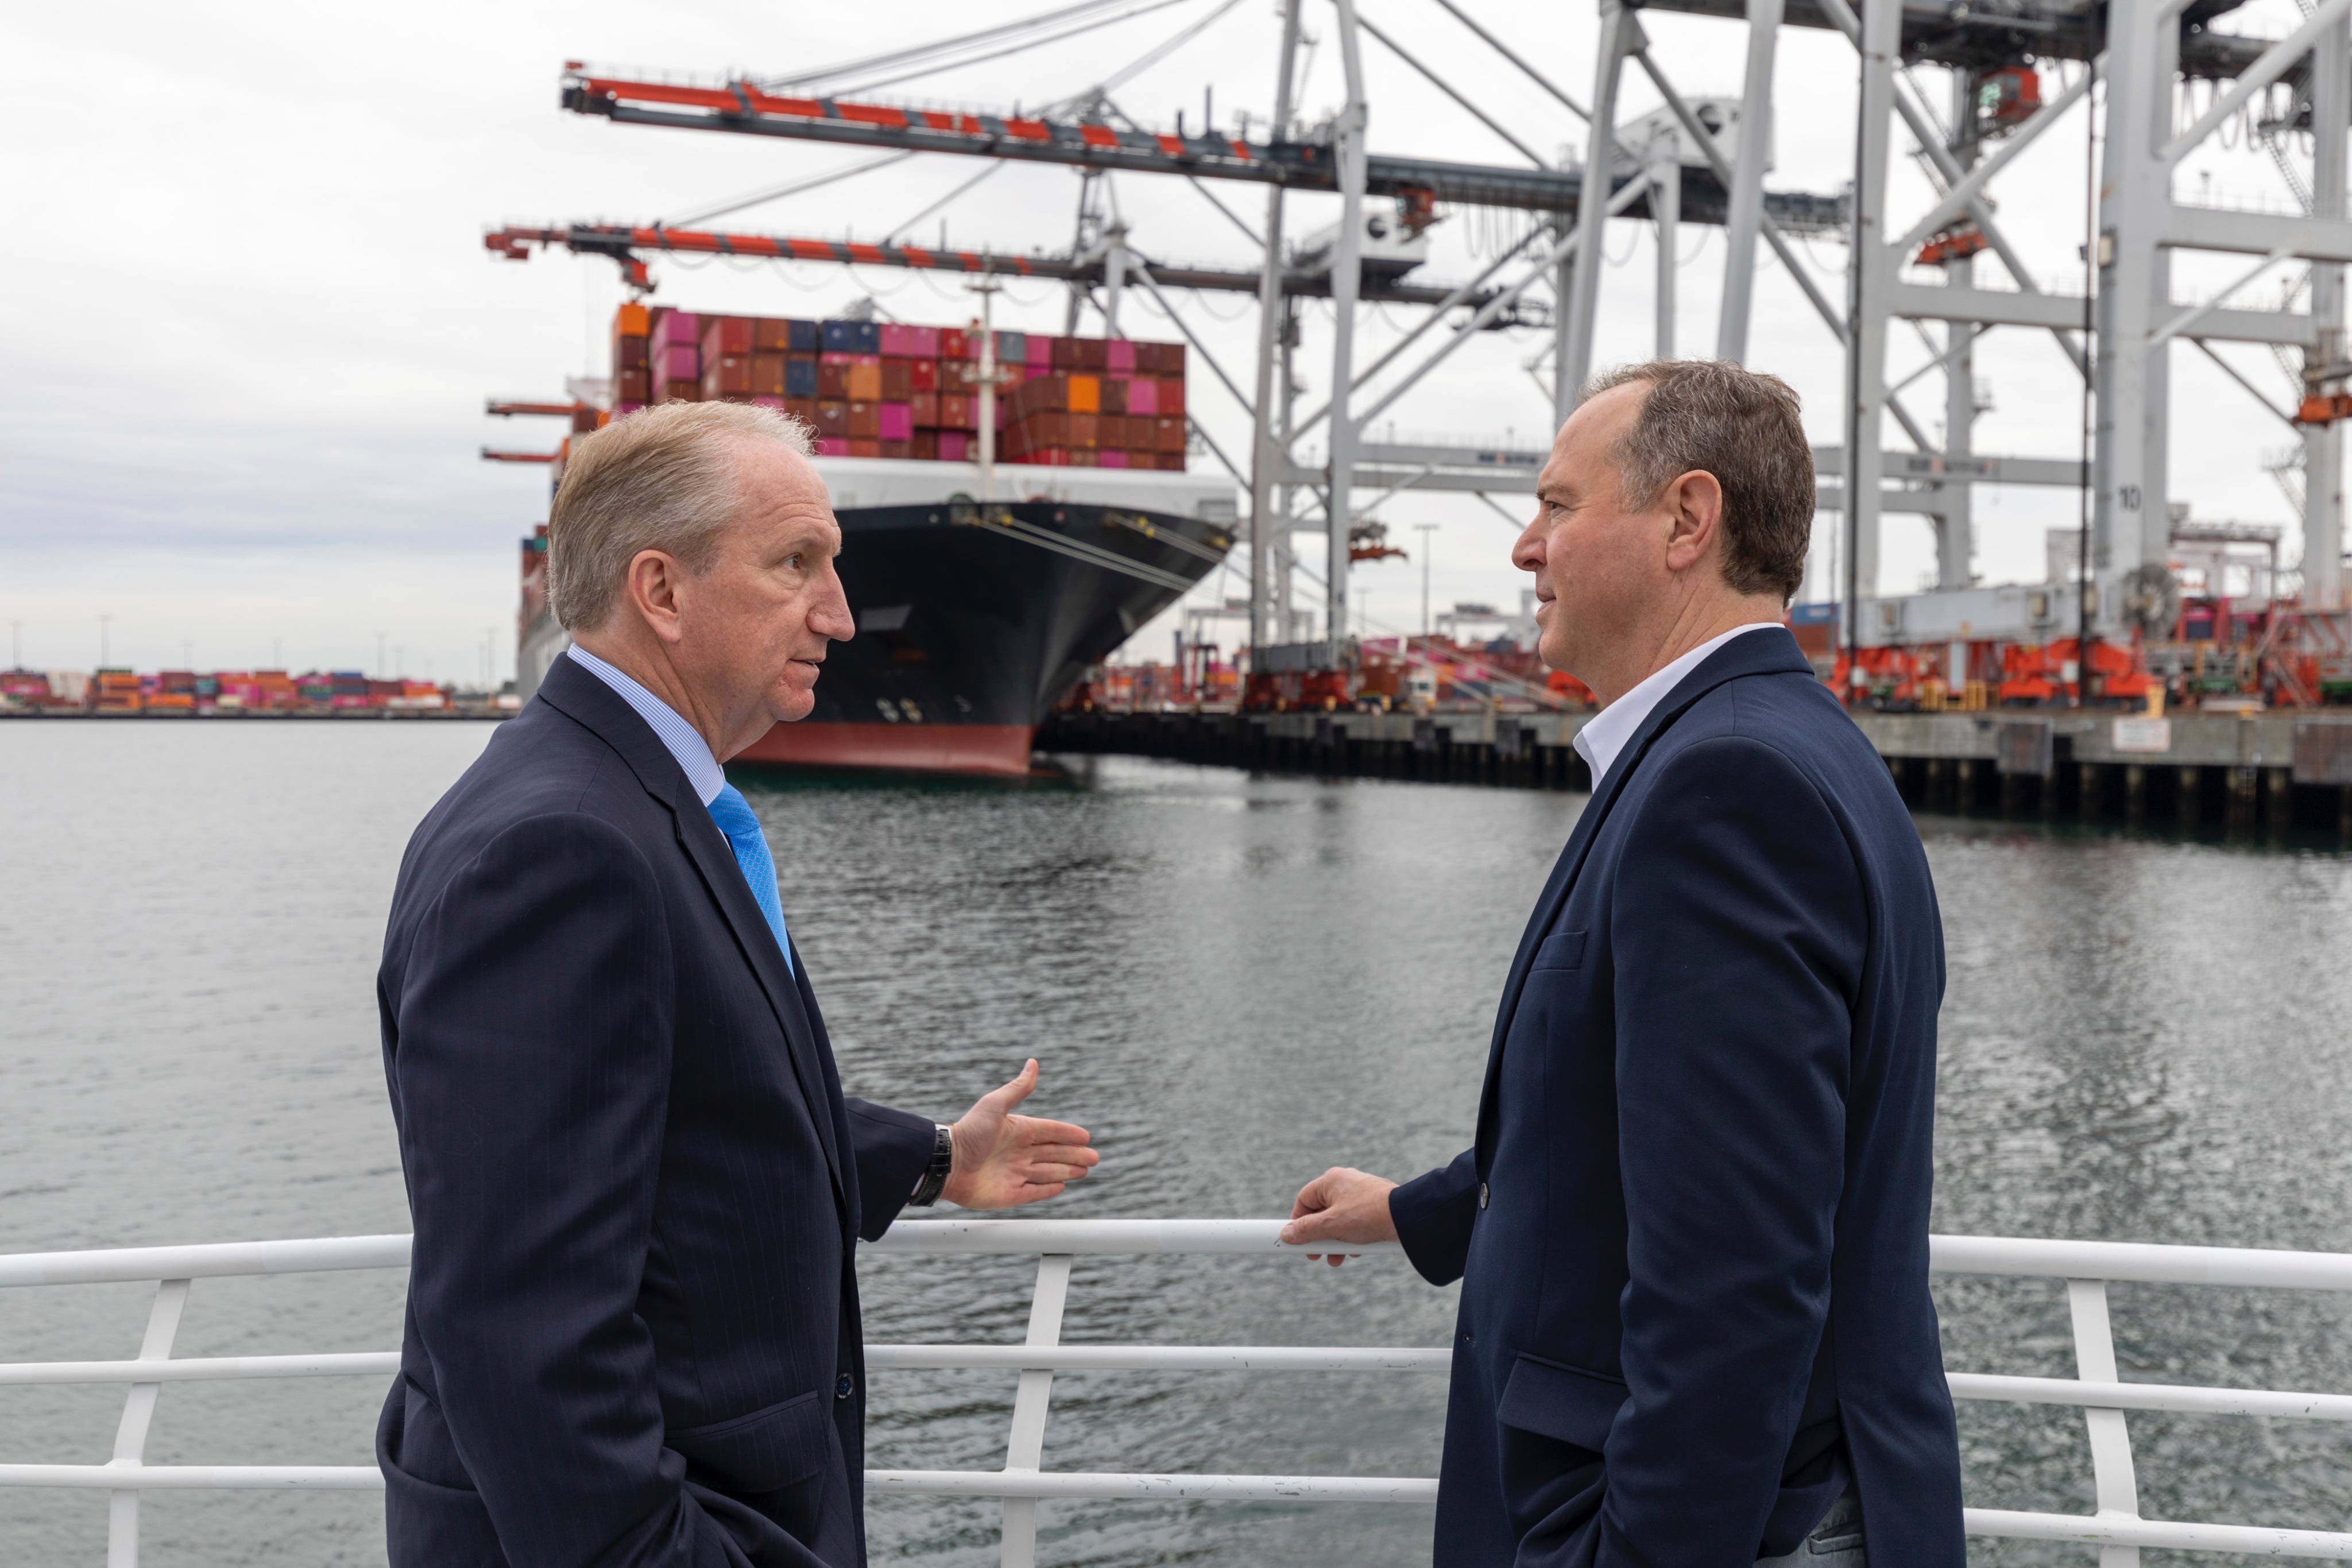 Rep. Schiff speaks with Port of Los Angeles Executive Director Executive Director Gene Seroka